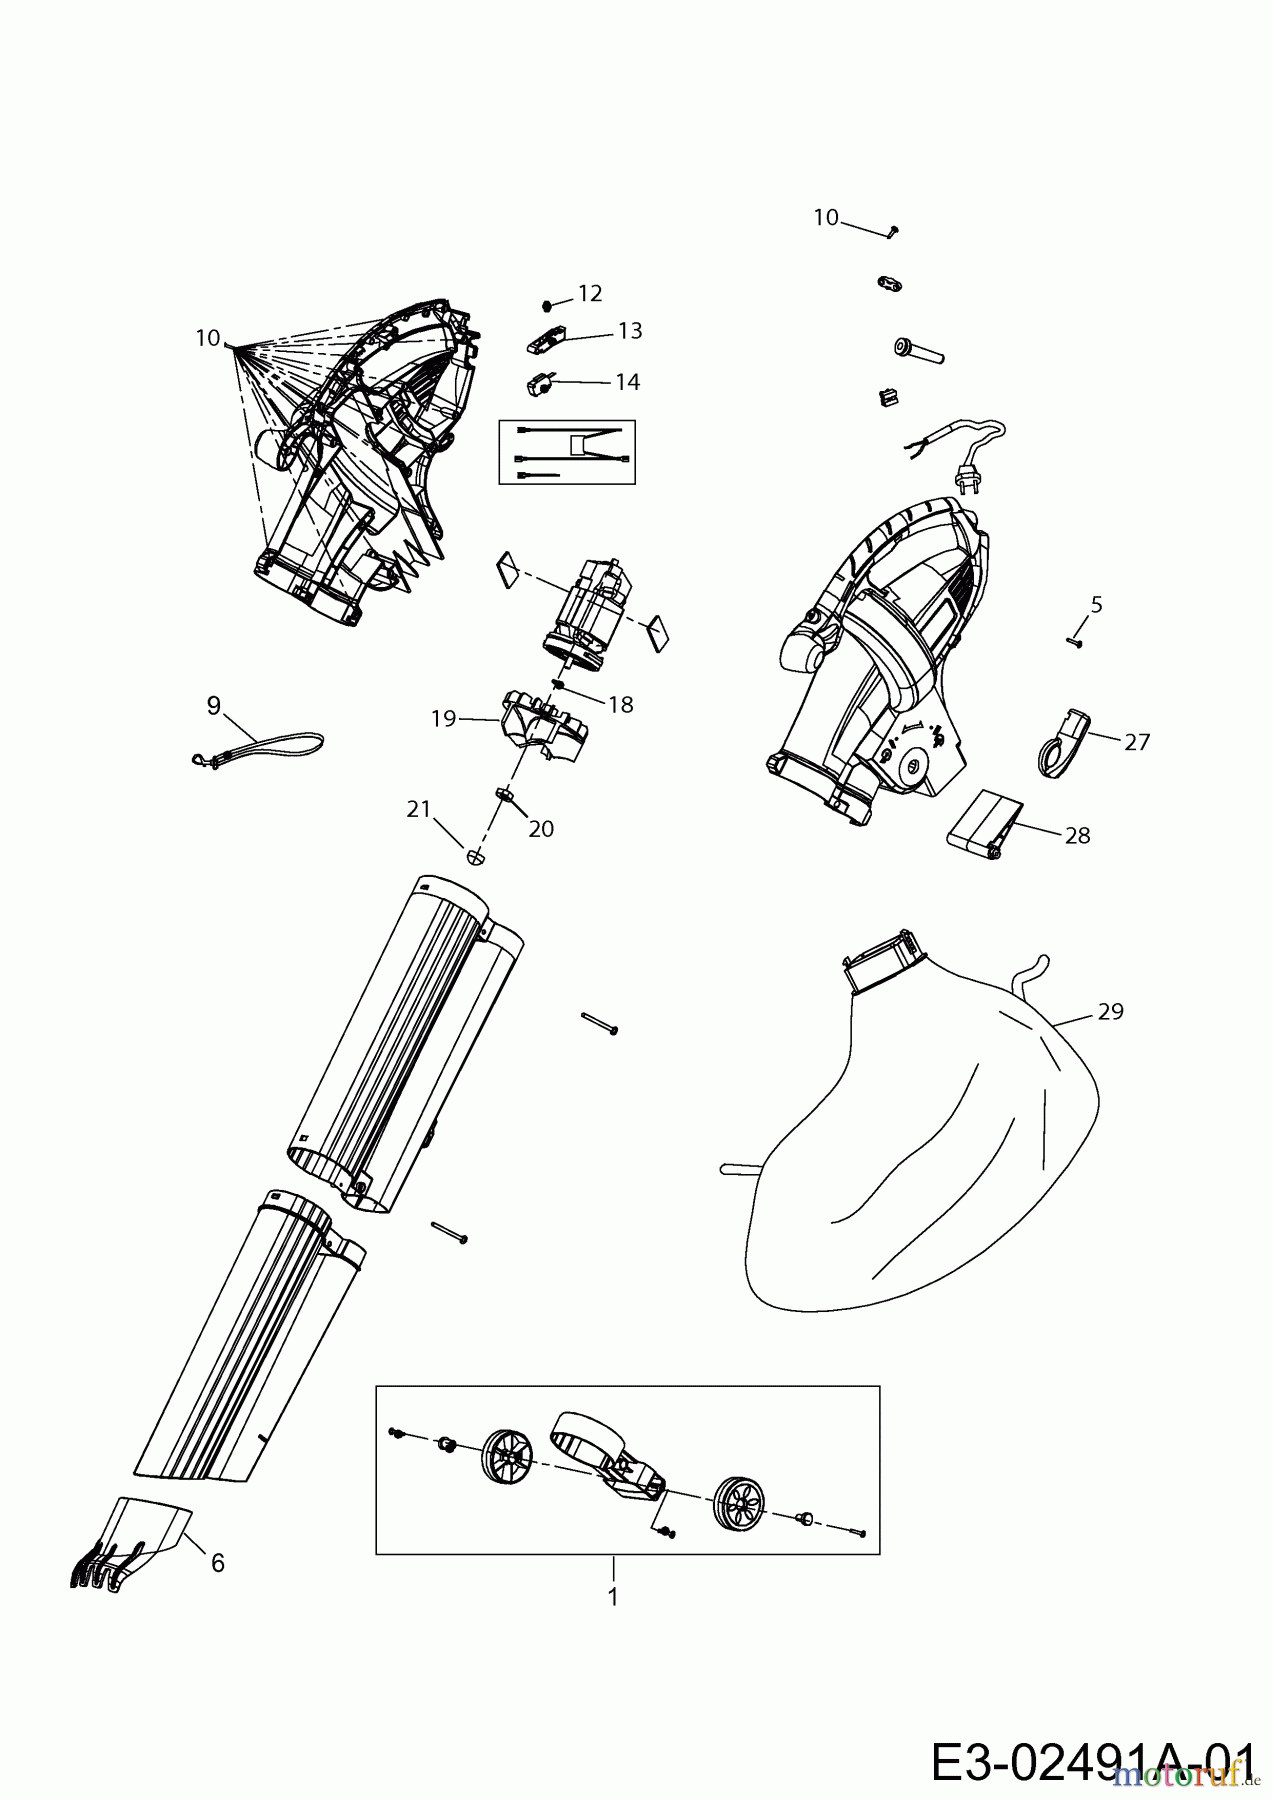  Wolf-Garten Leaf blower, Blower vac LBV 2600 E 41AB0BE7C50  (2020) Basic machine